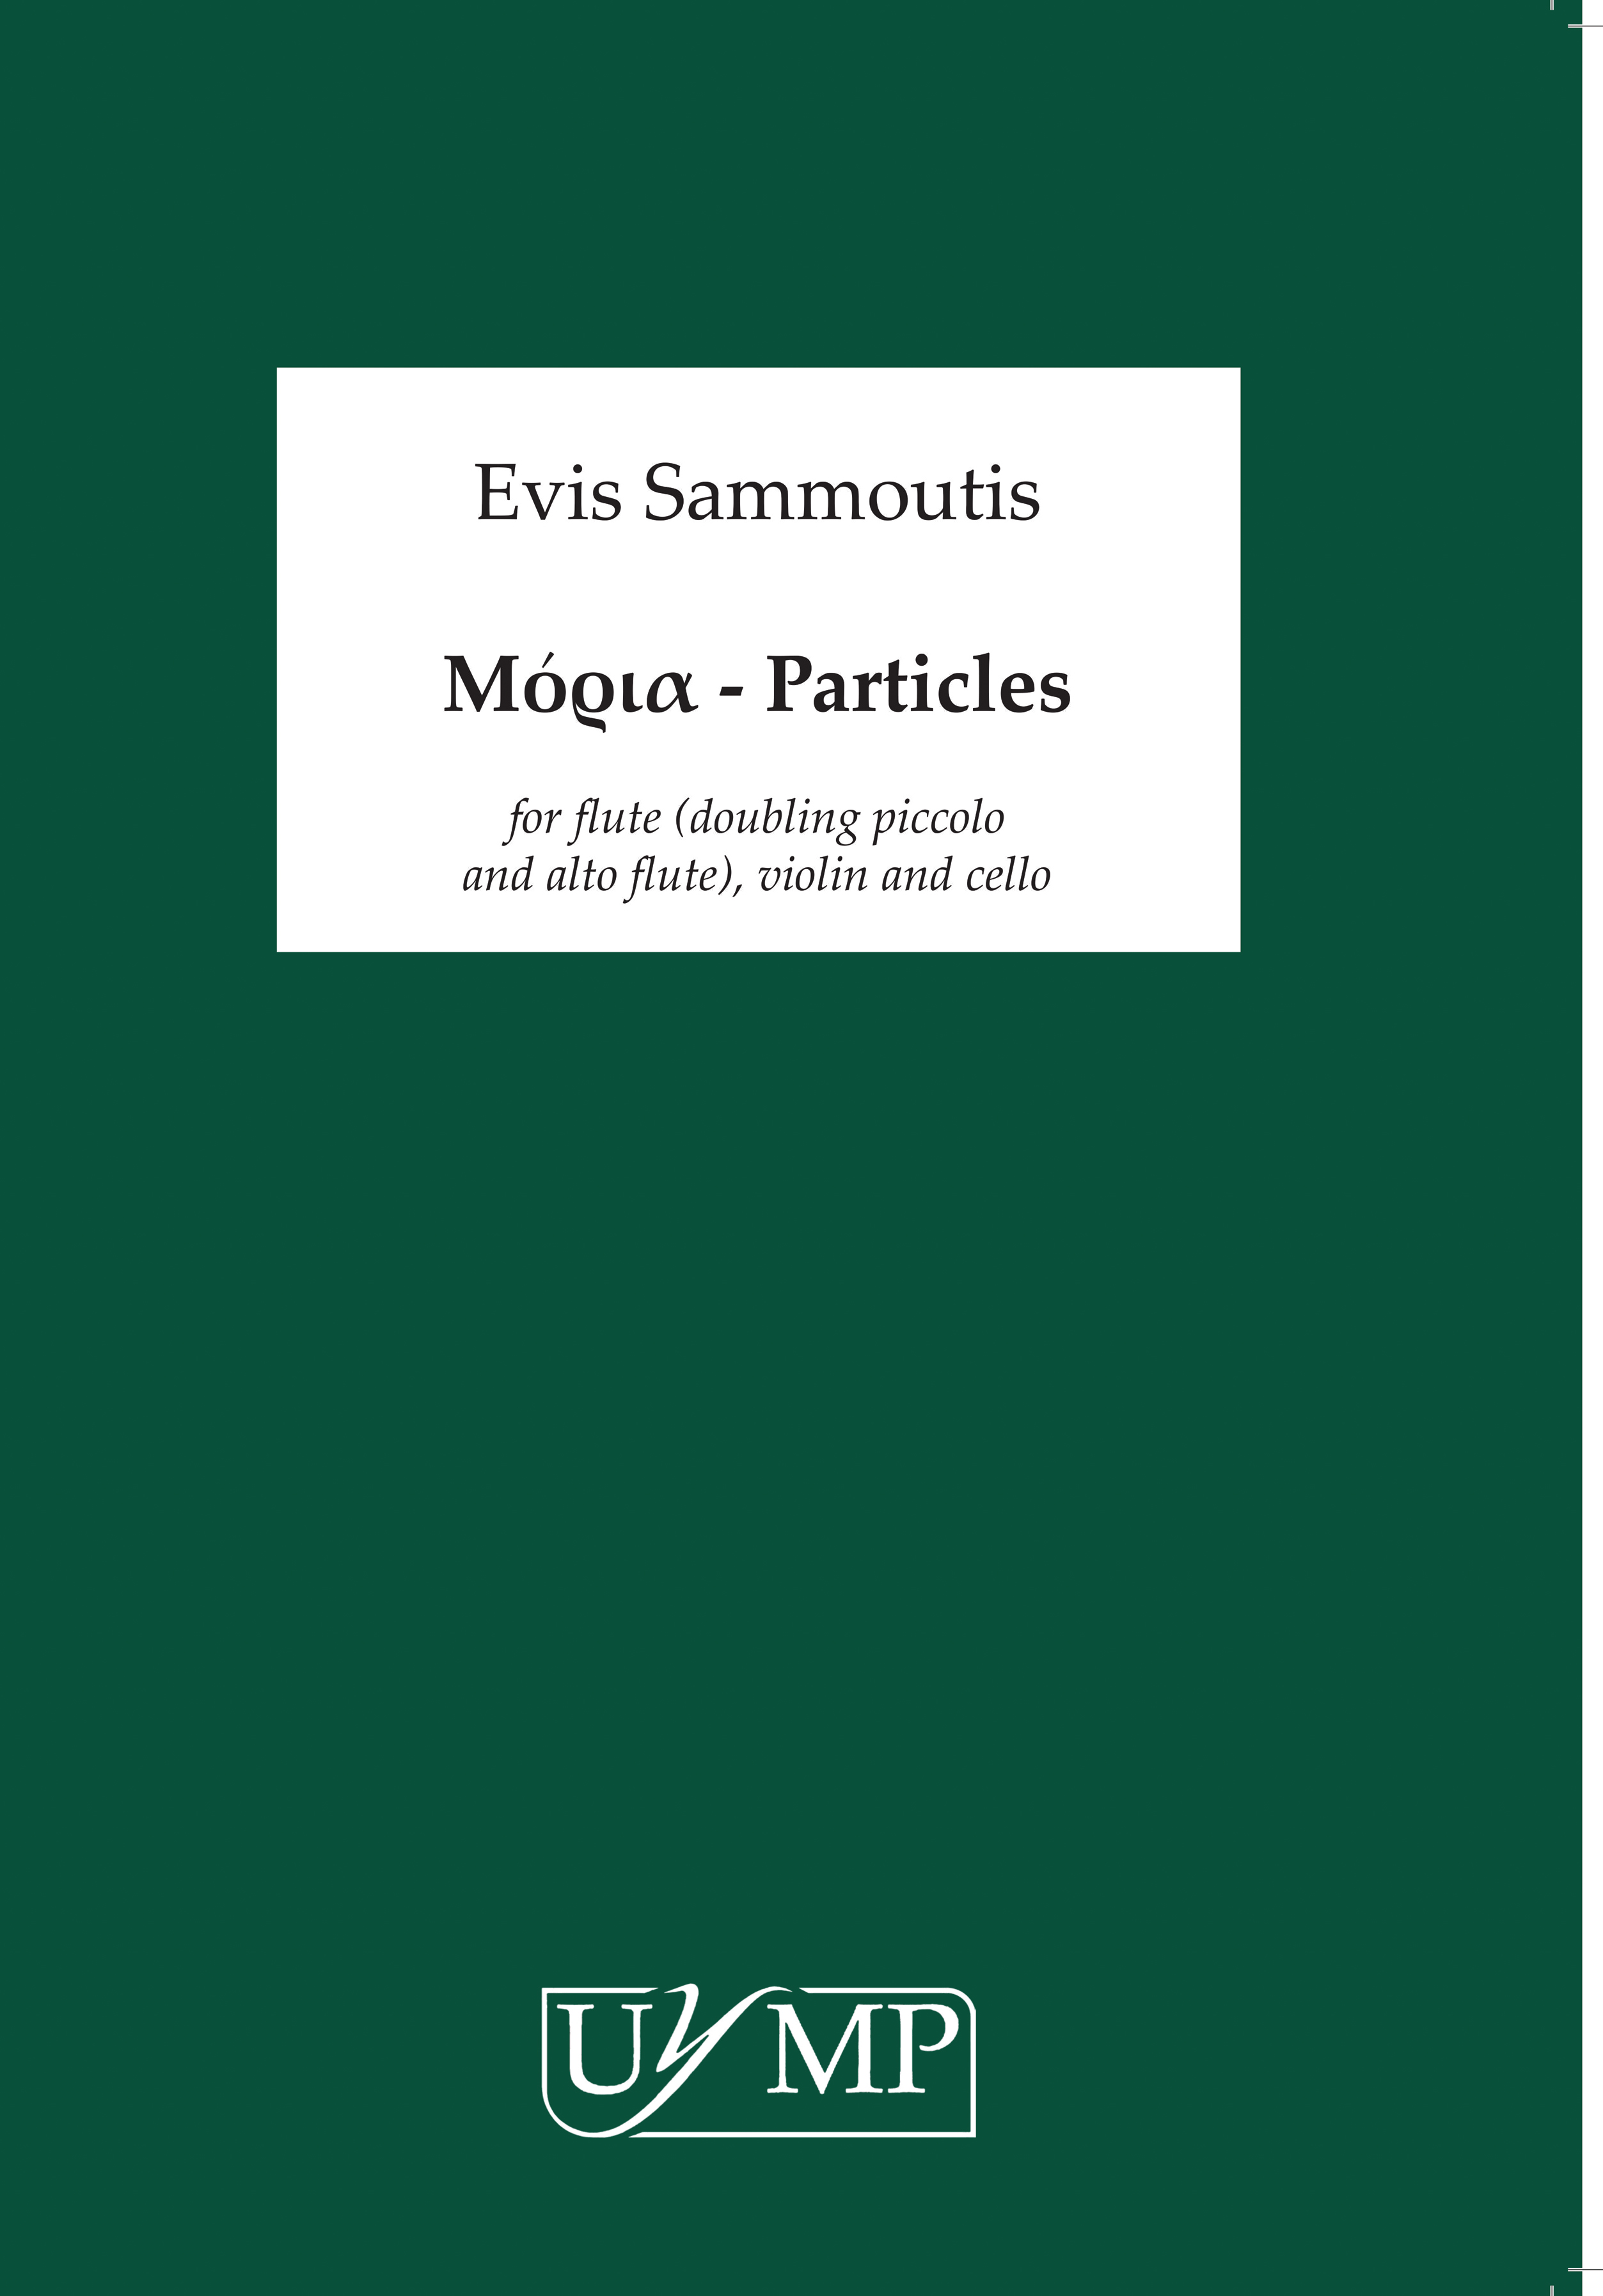 Evis Sammoutis: Particles: Mixed Trio: Score